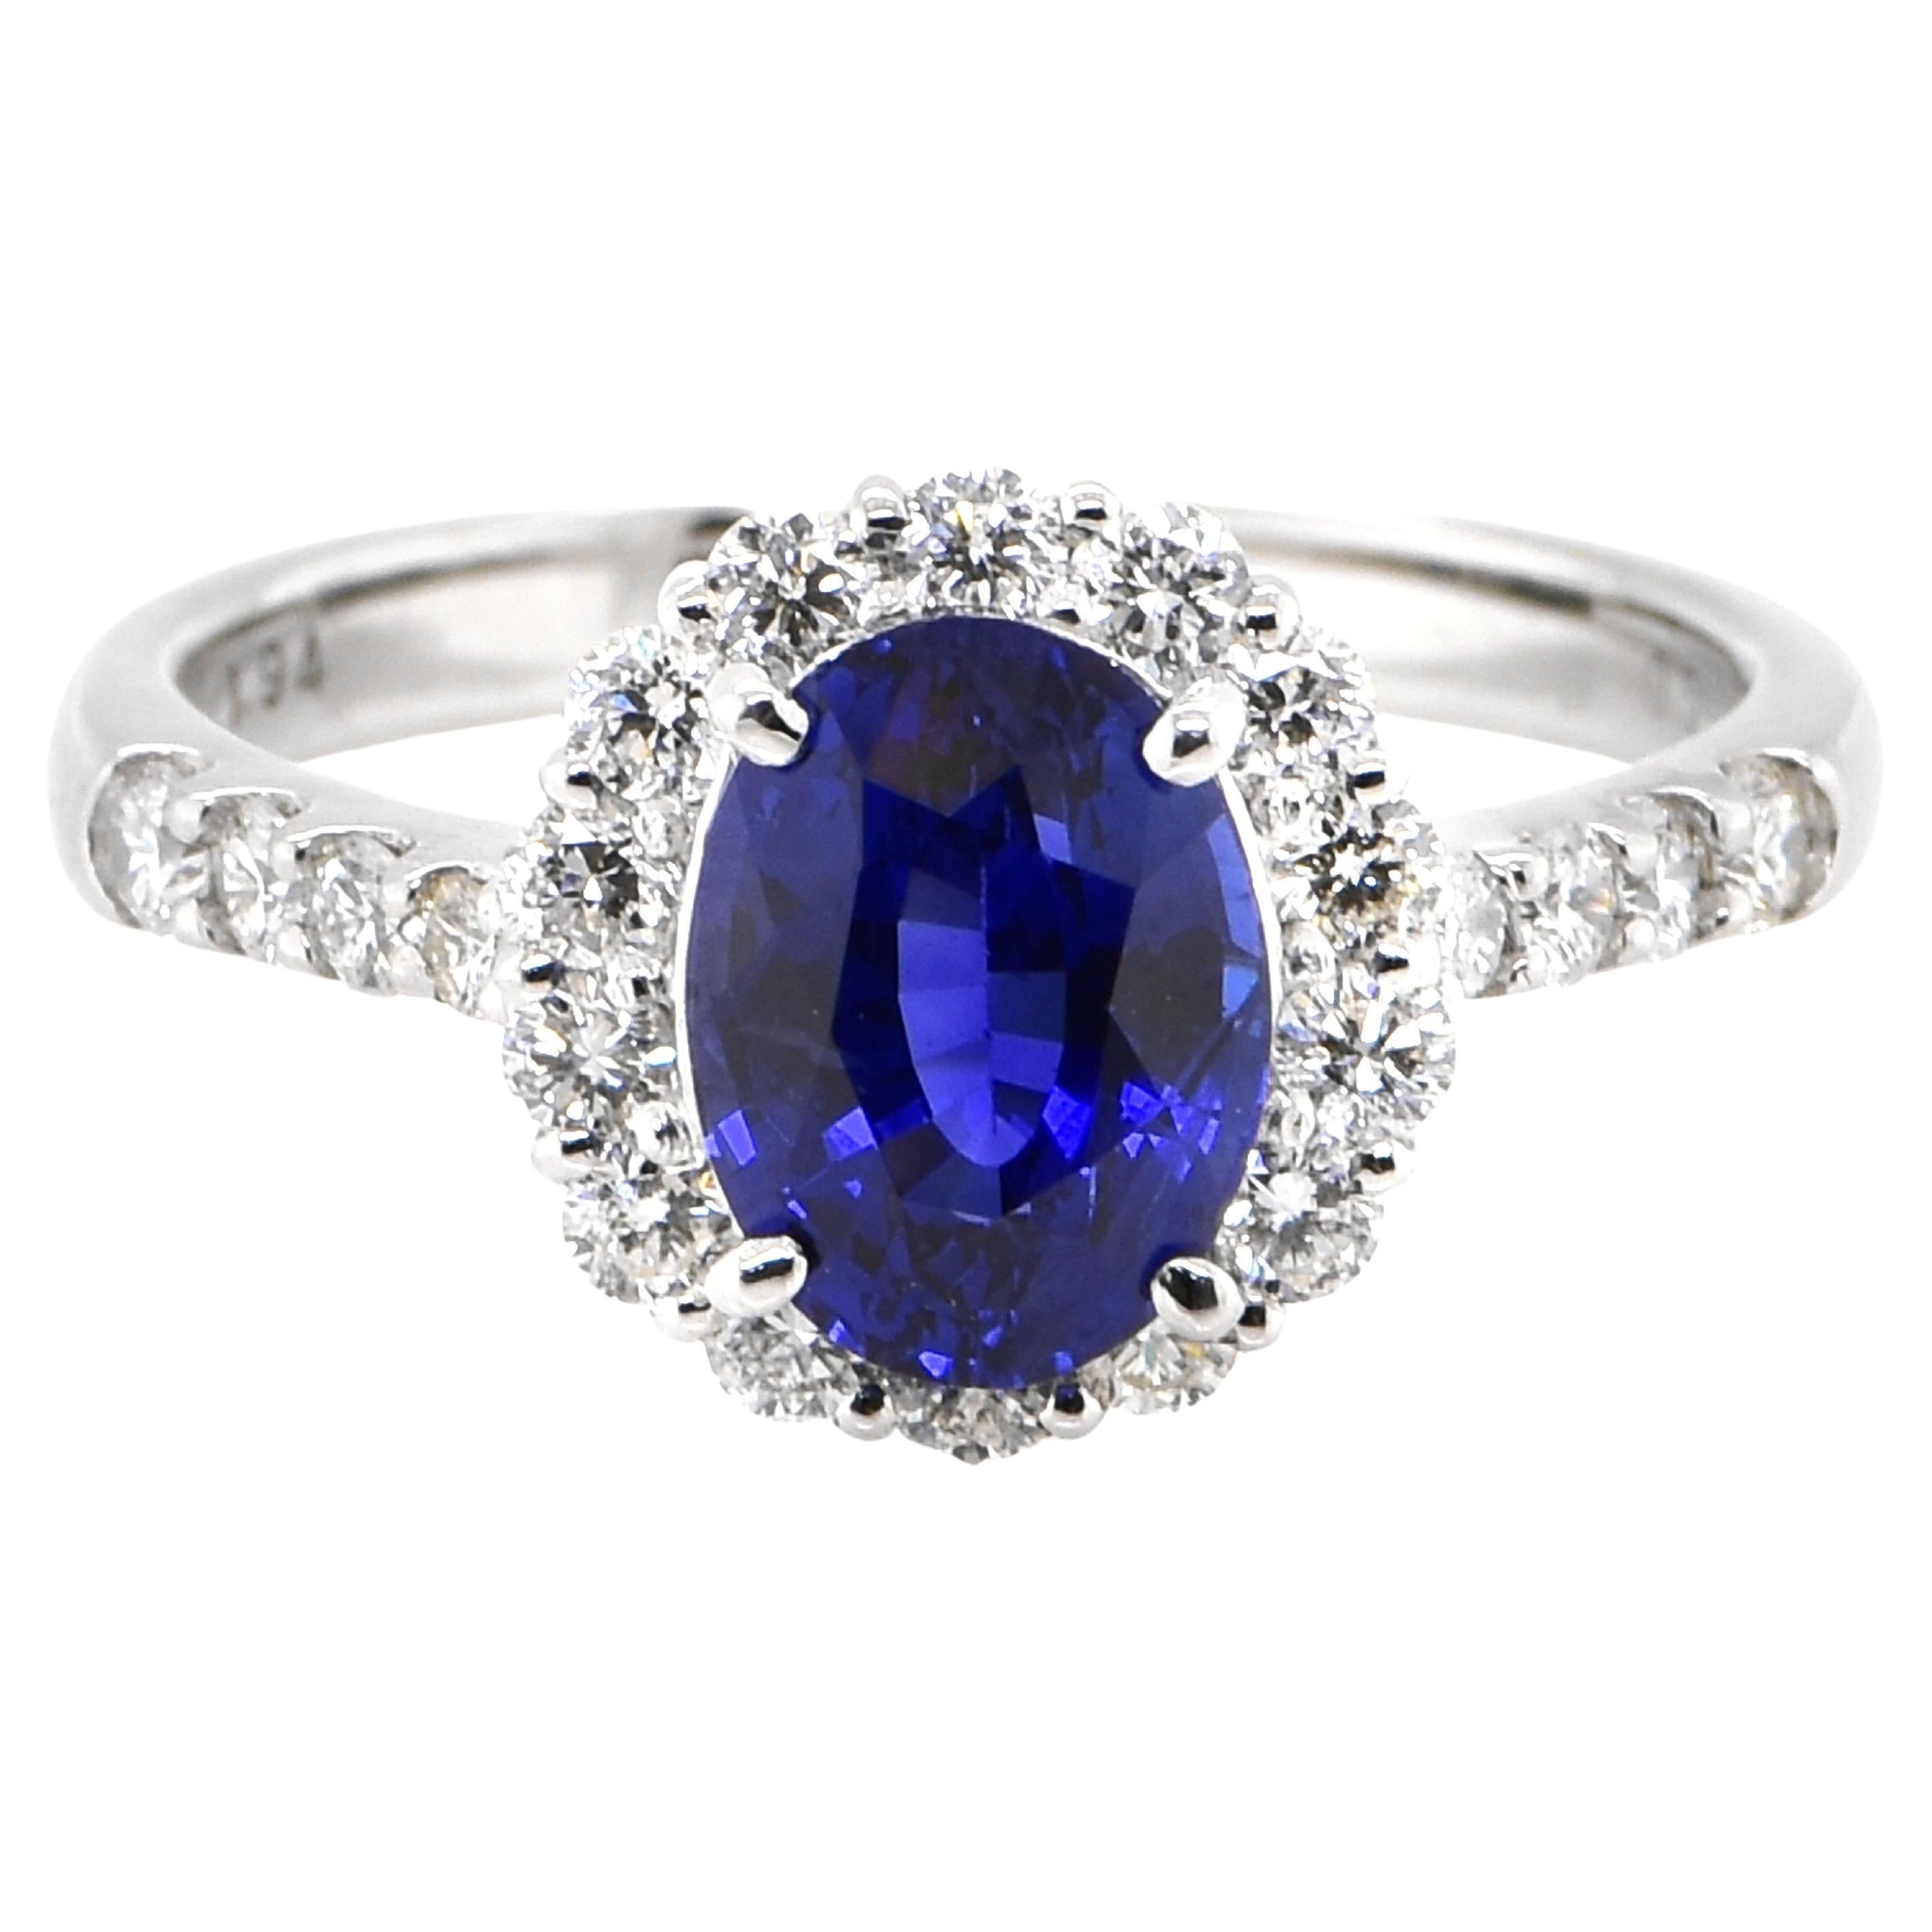 Bague halo de saphir bleu royal naturel de 1.92 carats et diamants